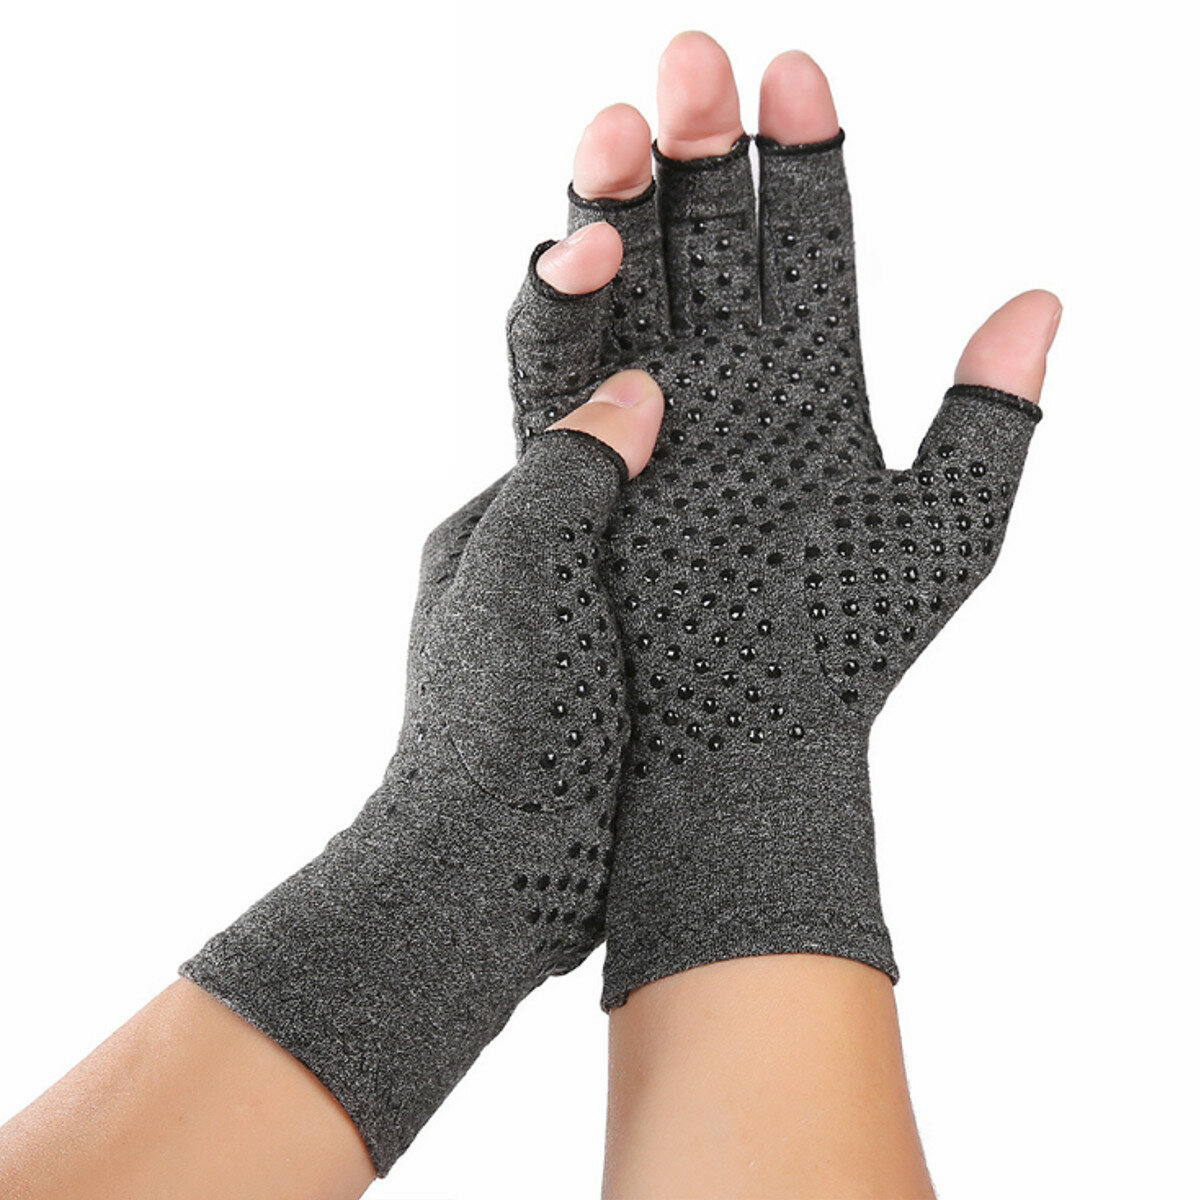 

KALOAD 1 Pair Sports Anti-skid Compression Gloves Health Care Half Finger Gloves Arthritis Pain Relief Gloves